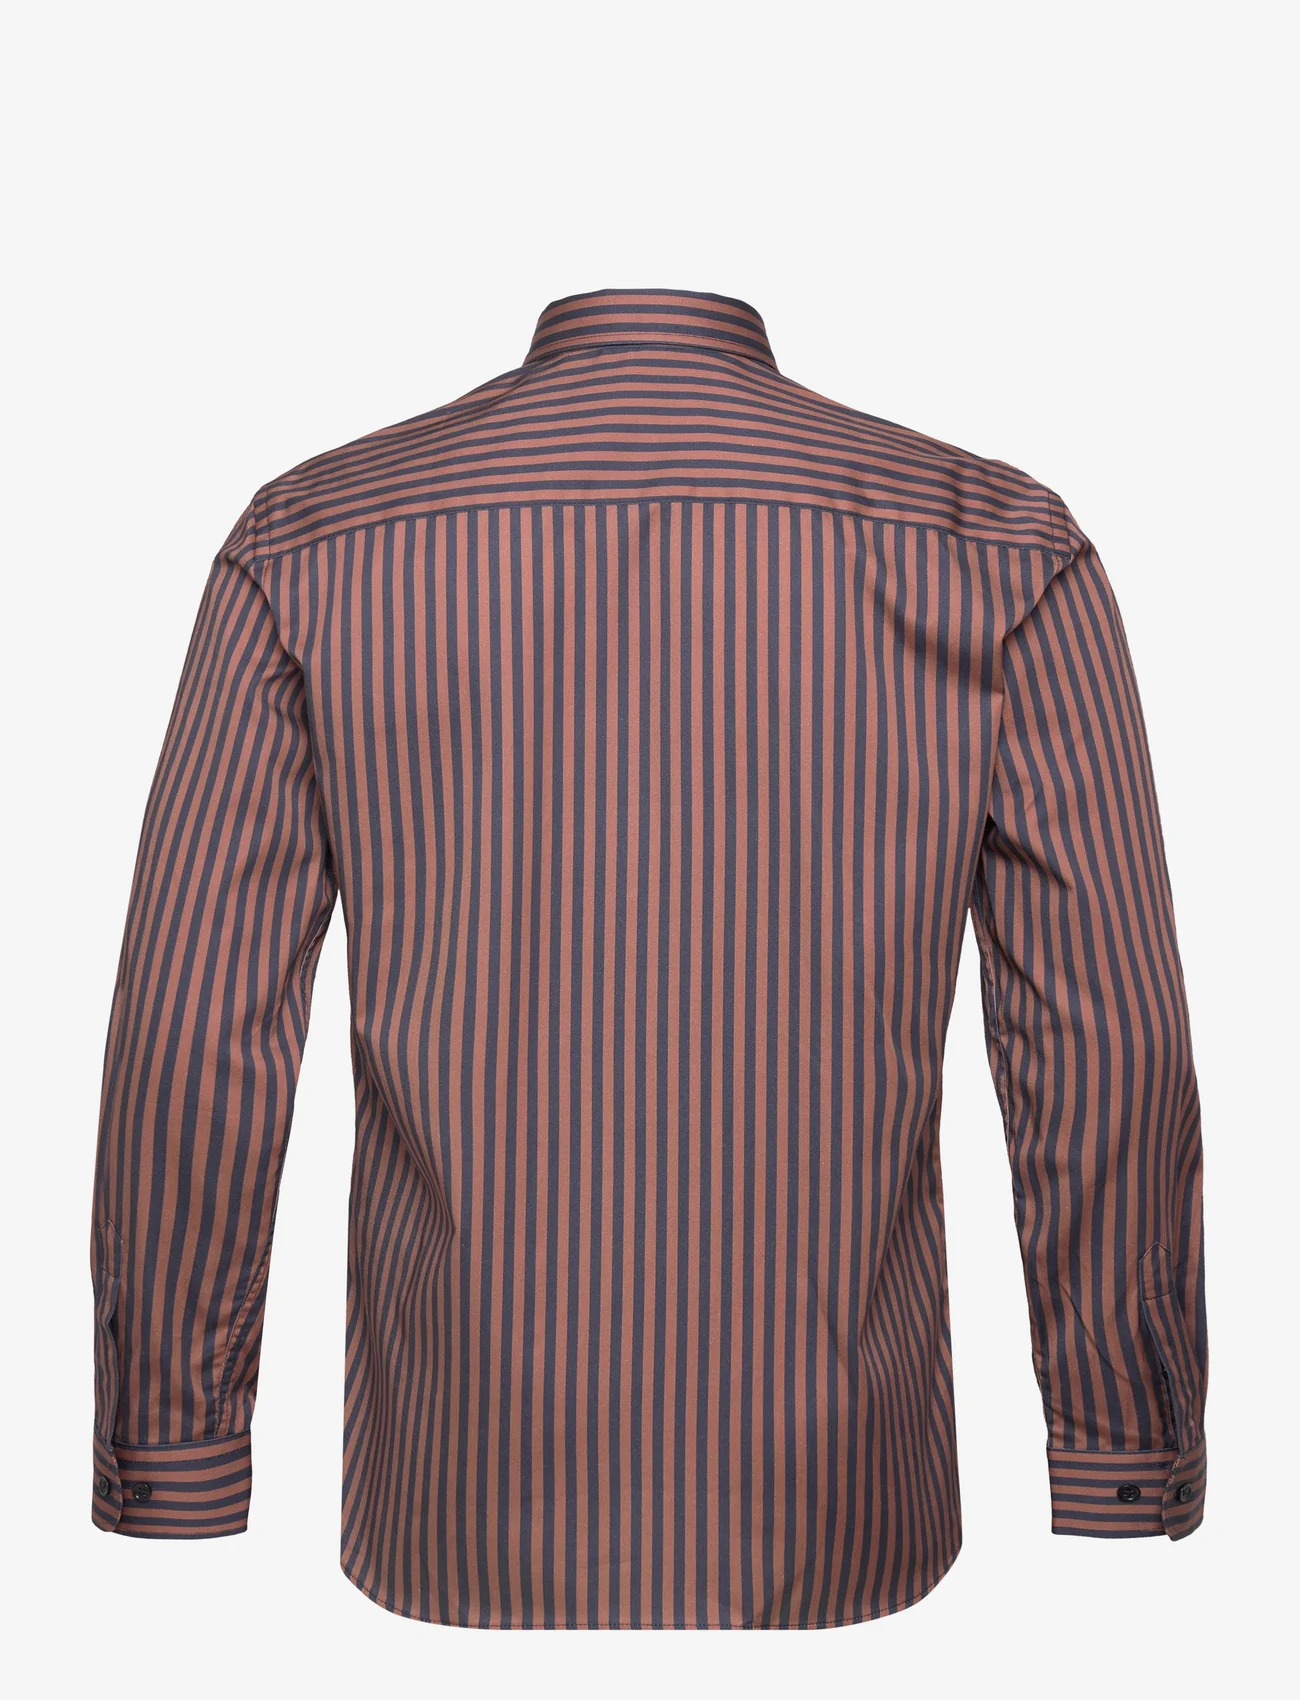 Bruuns Bazaar - Lyx Norman shirt - penskjorter - brown stripe - 1